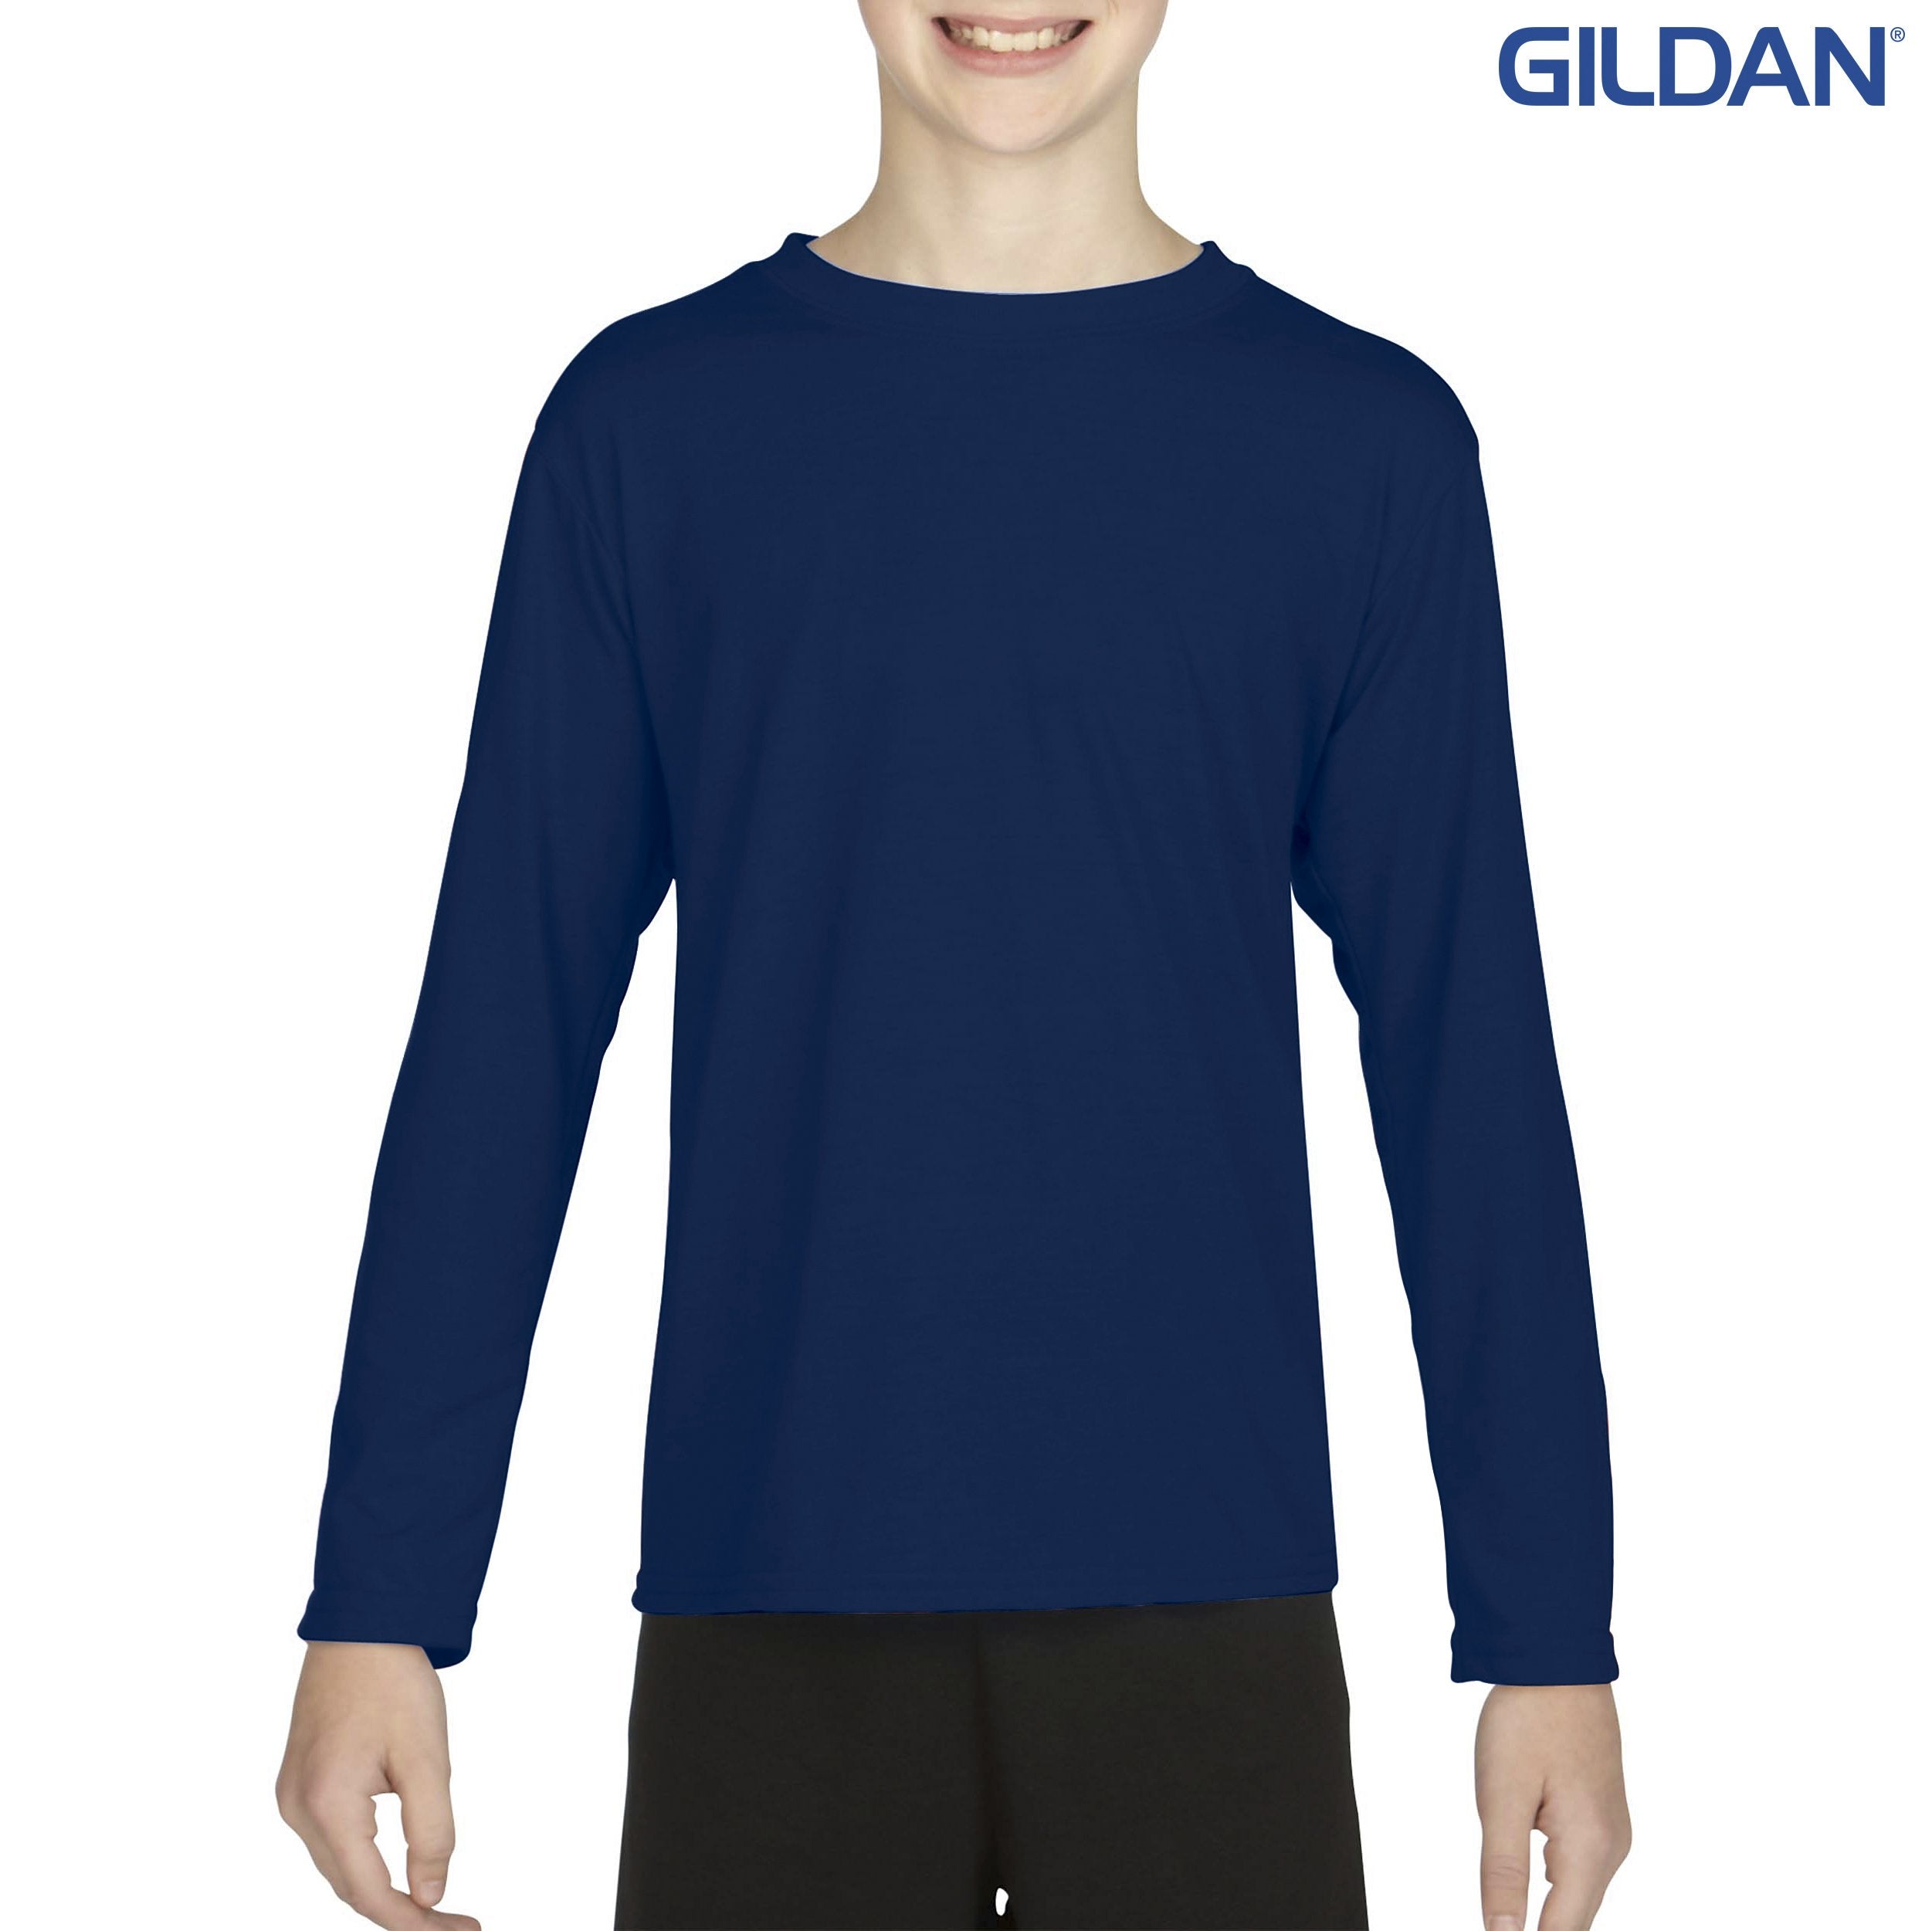 Gildan Performance Youth T-Shirt